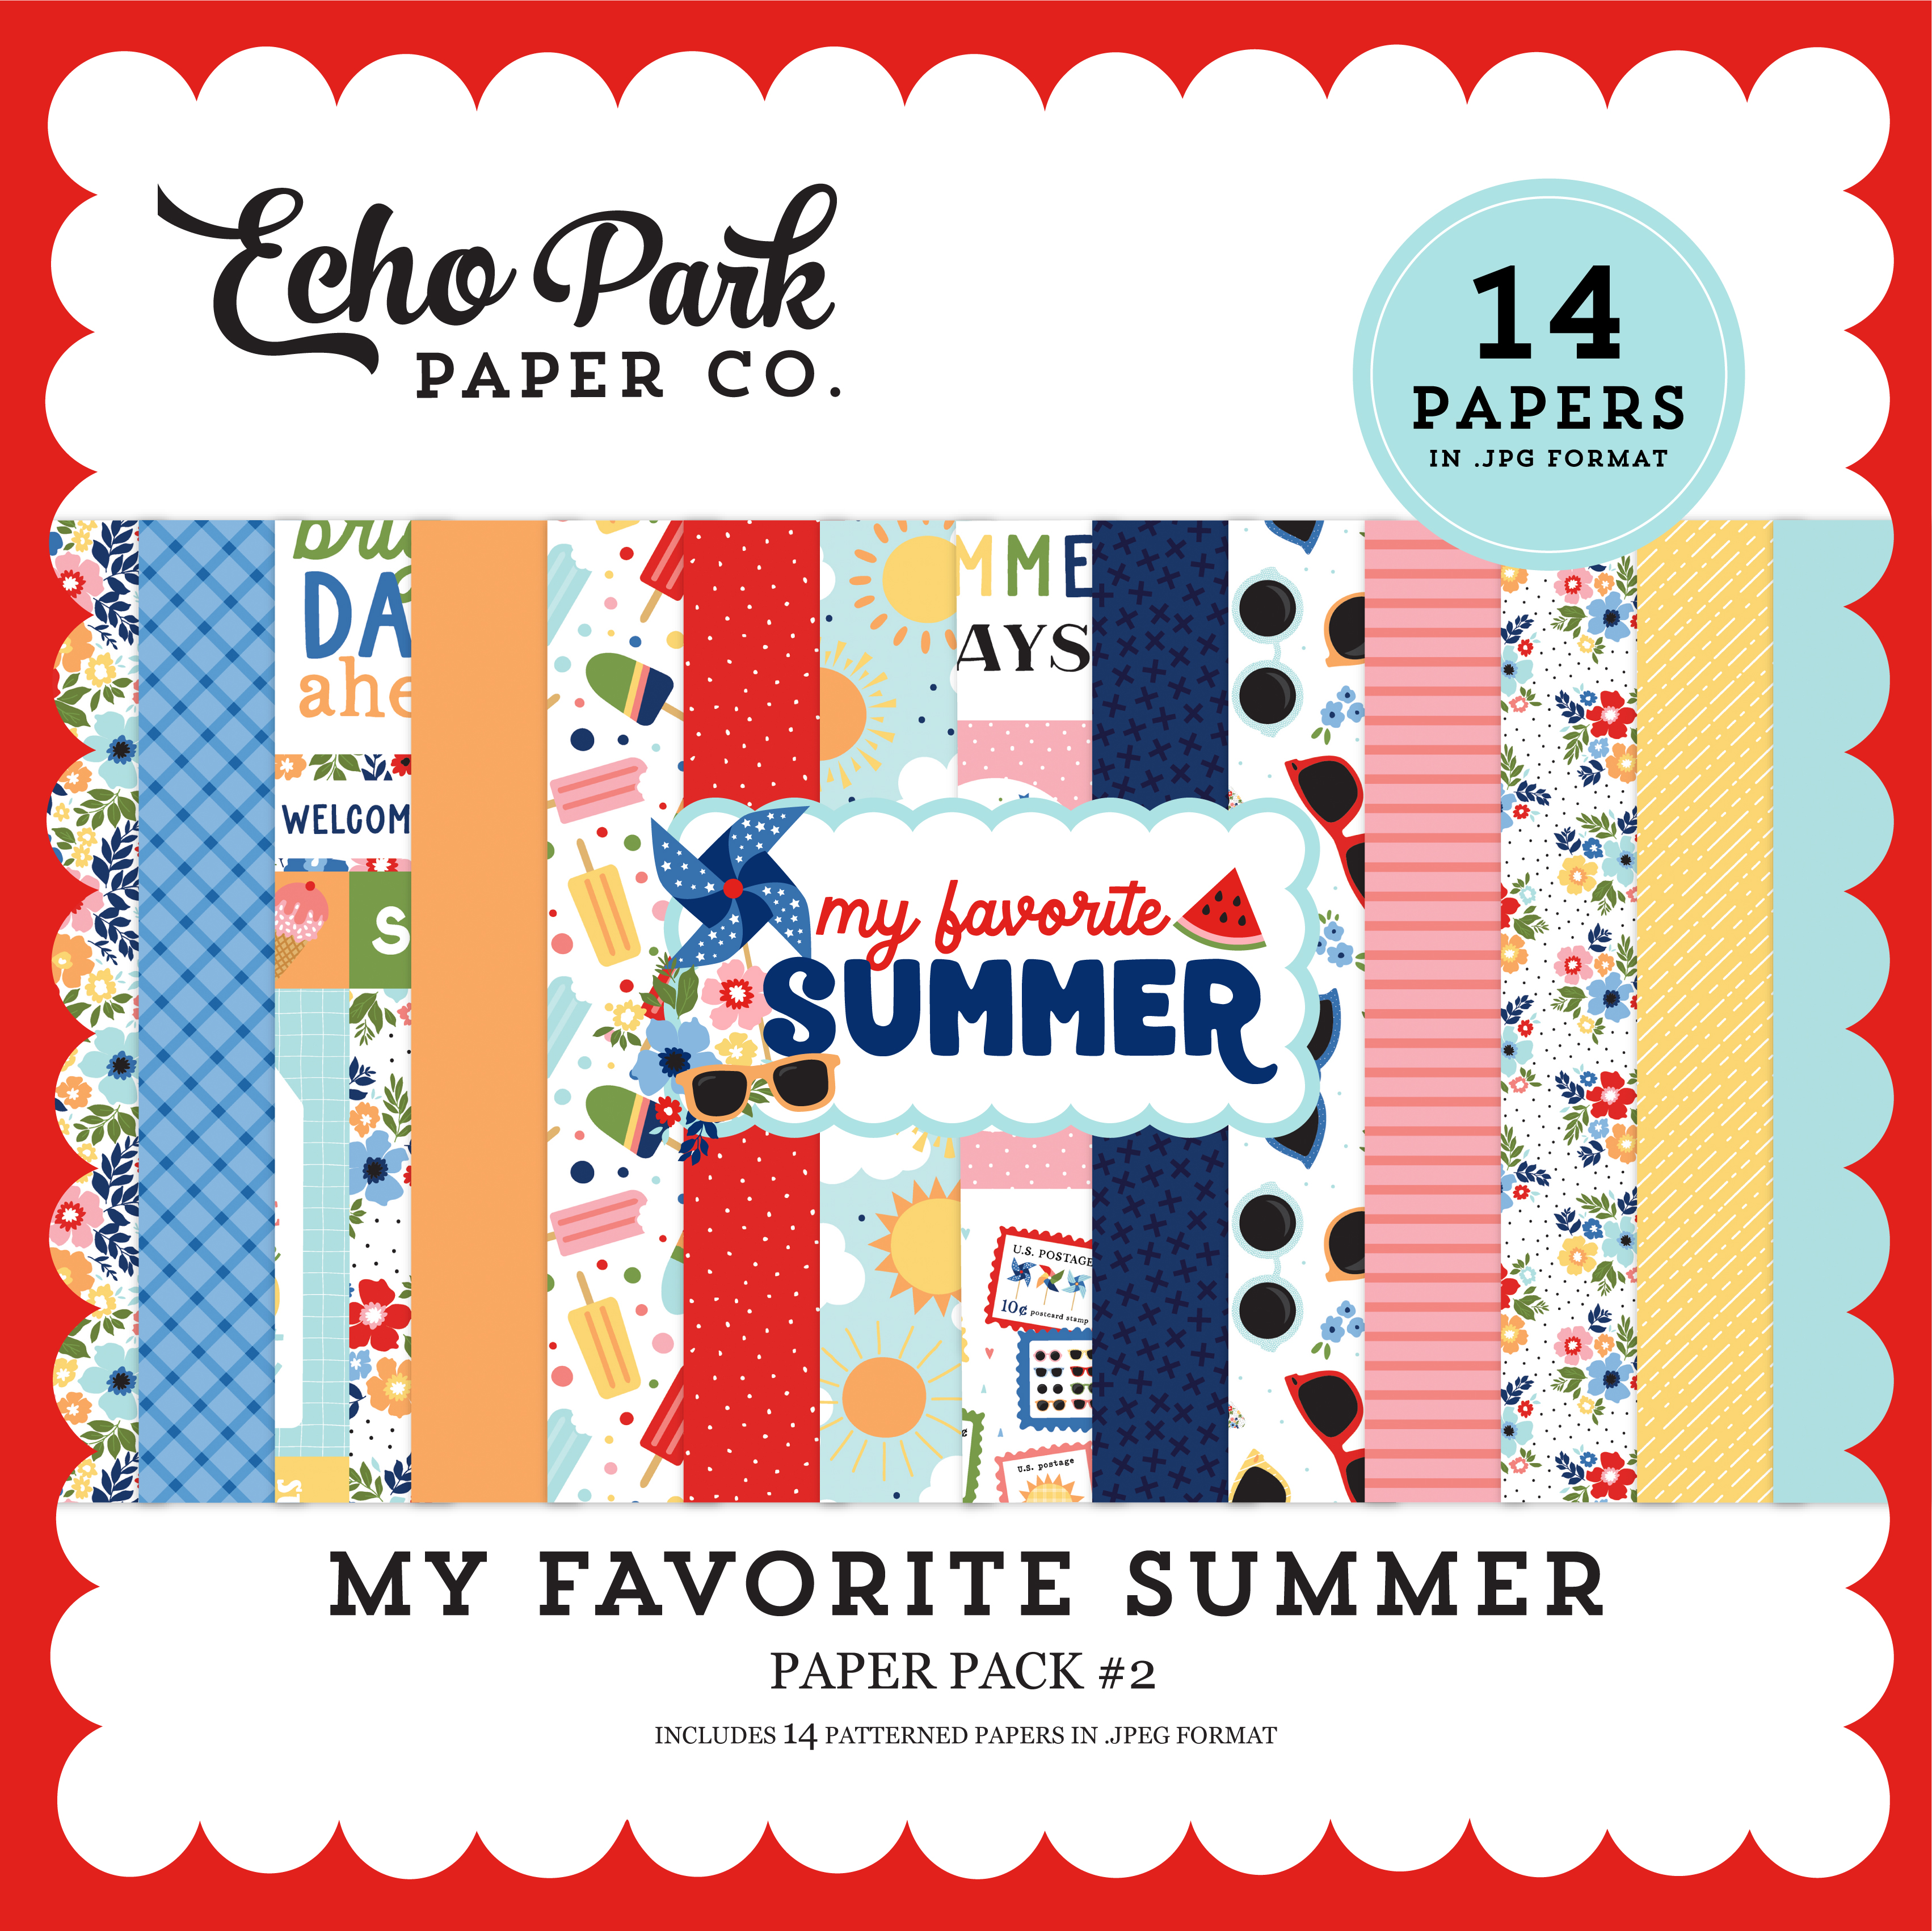 My Favorite Summer Paper Pack #2